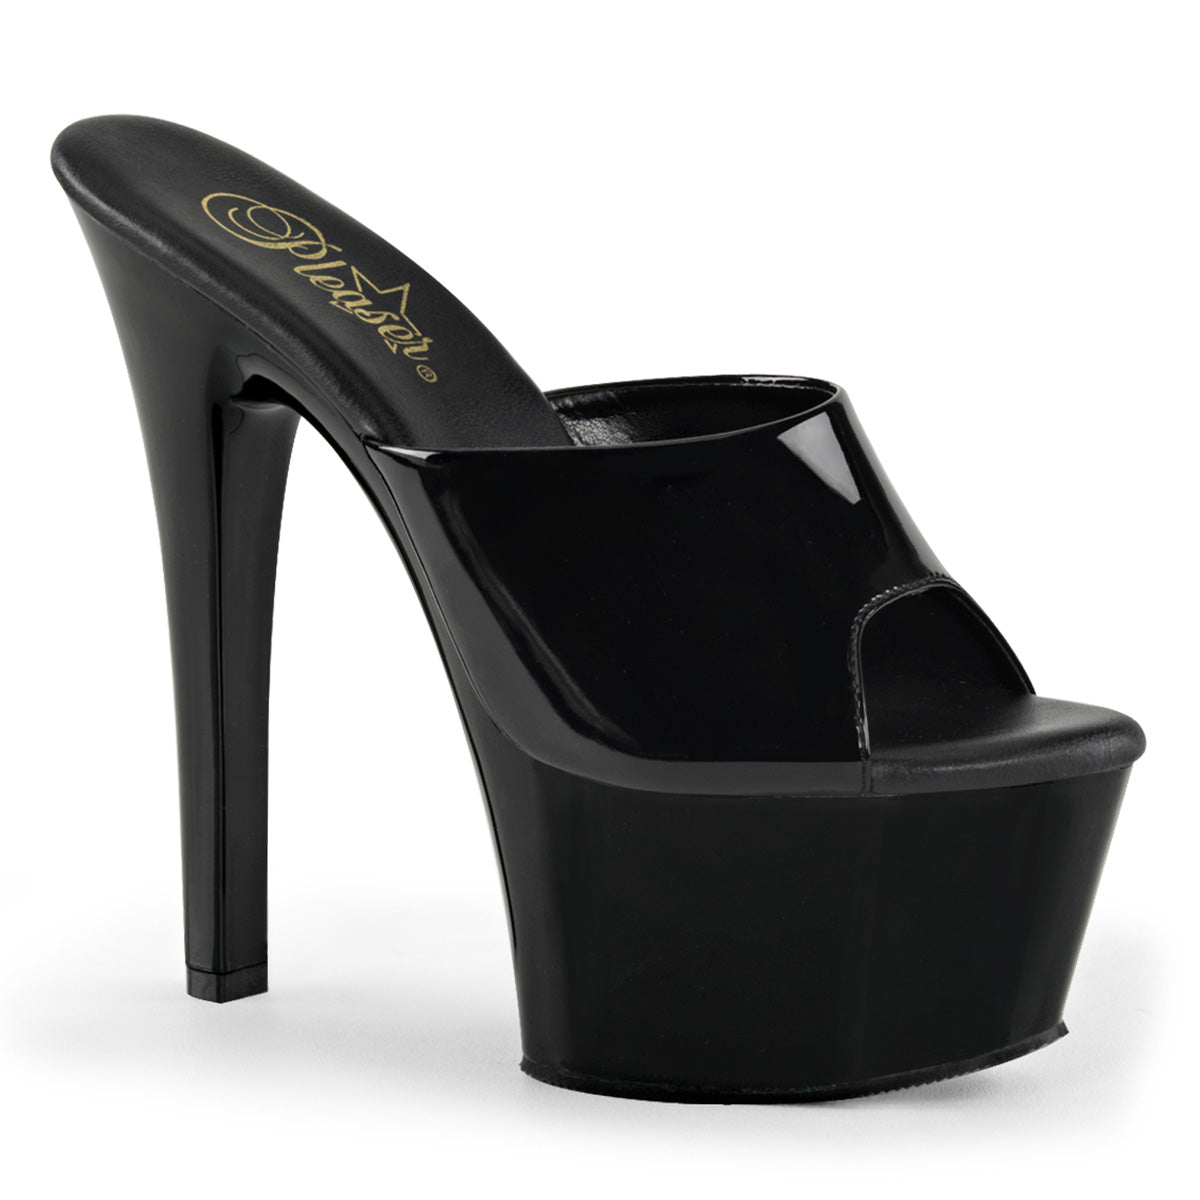 ASPIRE-601 Sexy 6" Heel Black Patent Stripper Shoes